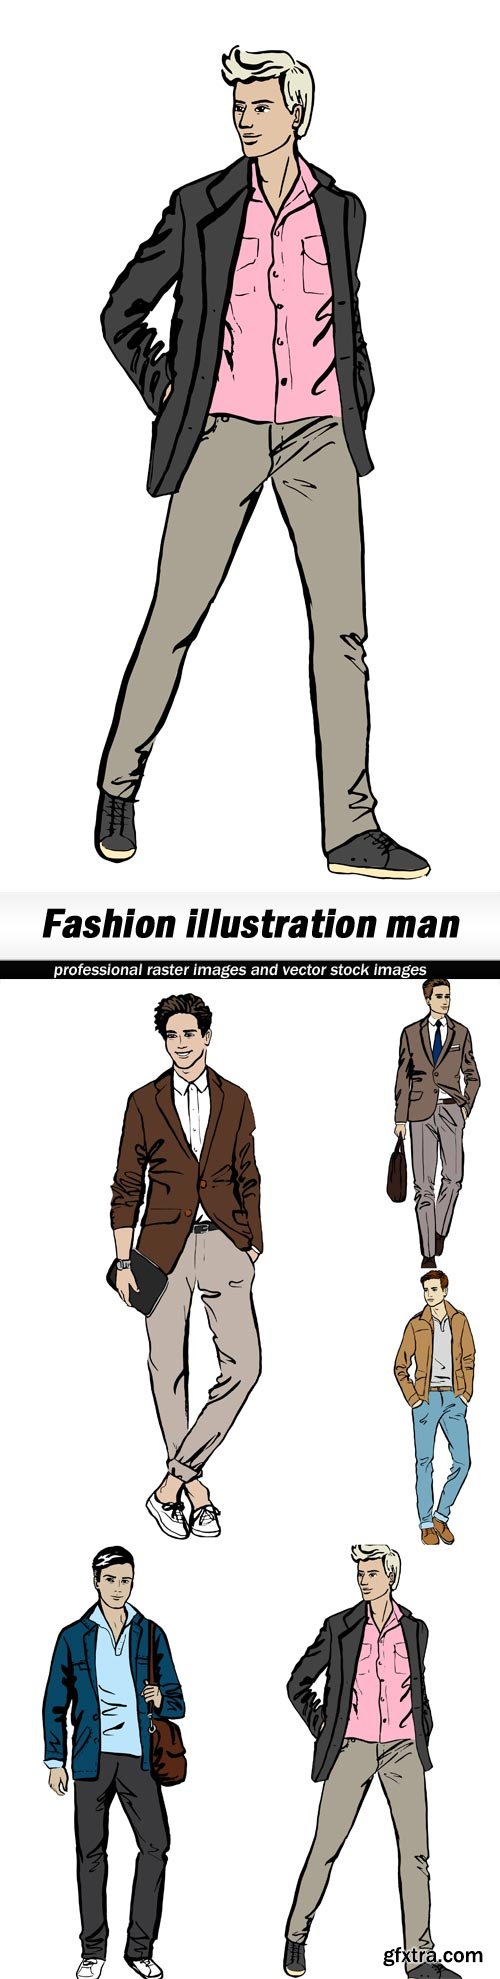 Fashion illustration man - 5 EPS